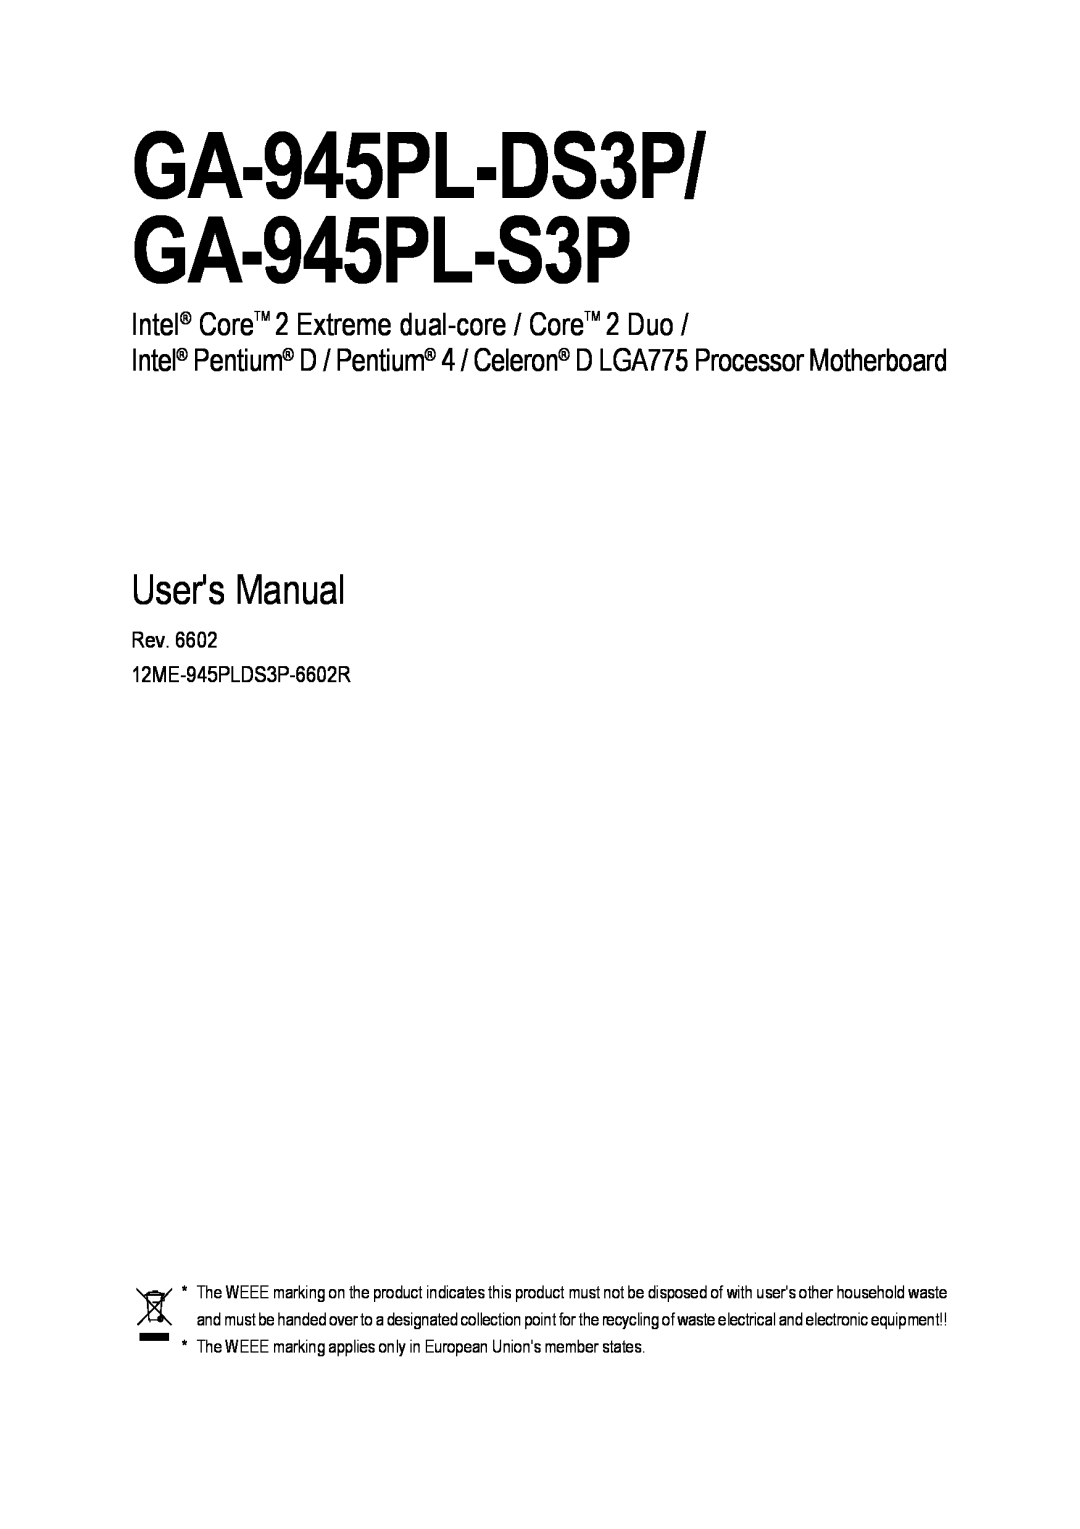 Intel user manual GA-945PL-DS3P GA-945PL-S3P, Users Manual, Intel CoreTM 2 Extreme dual-core / CoreTM 2 Duo 